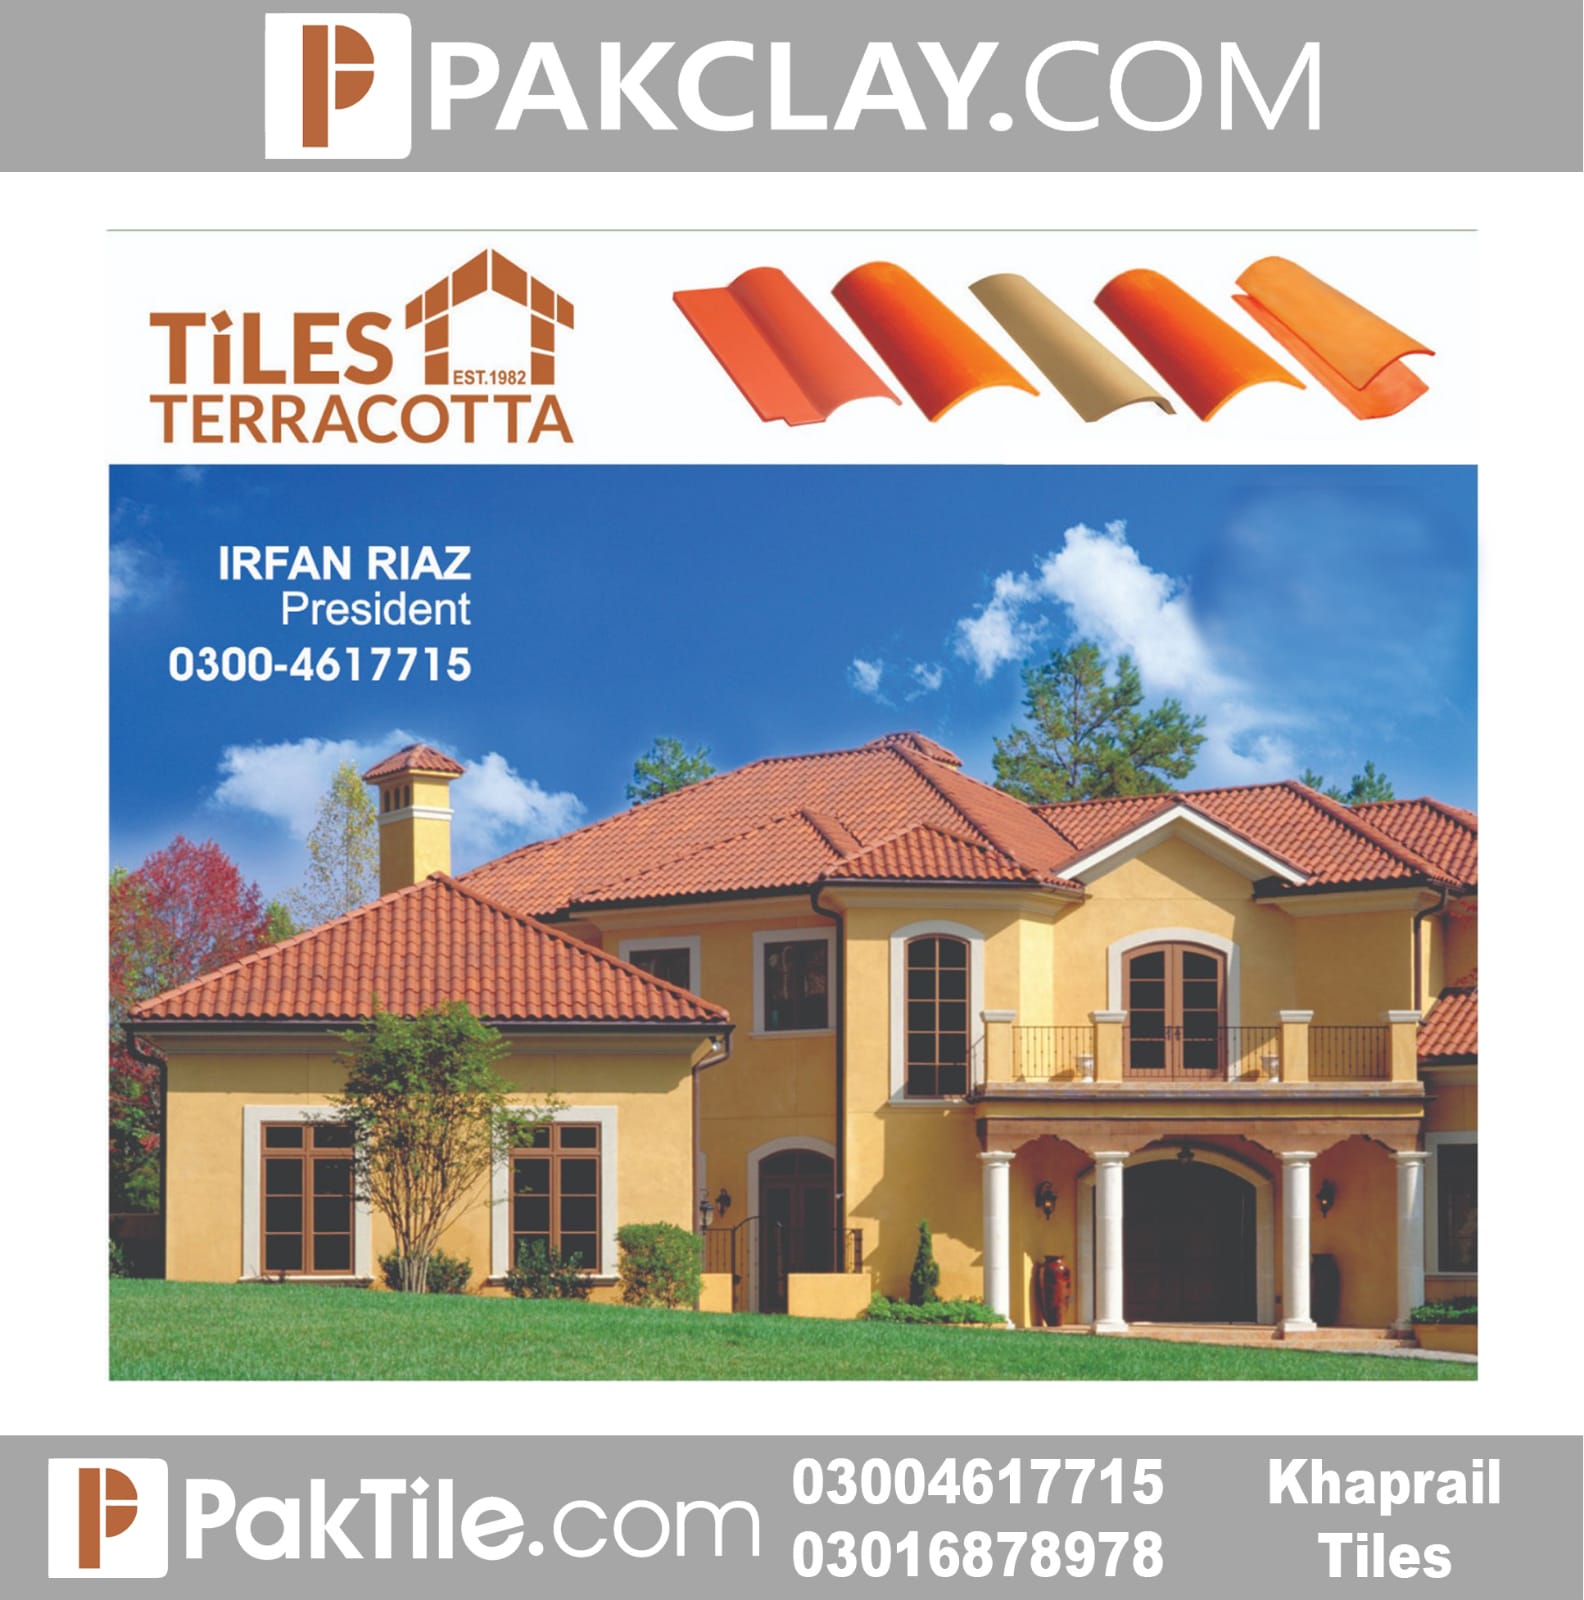 Natural Khaprail Roof Tiles